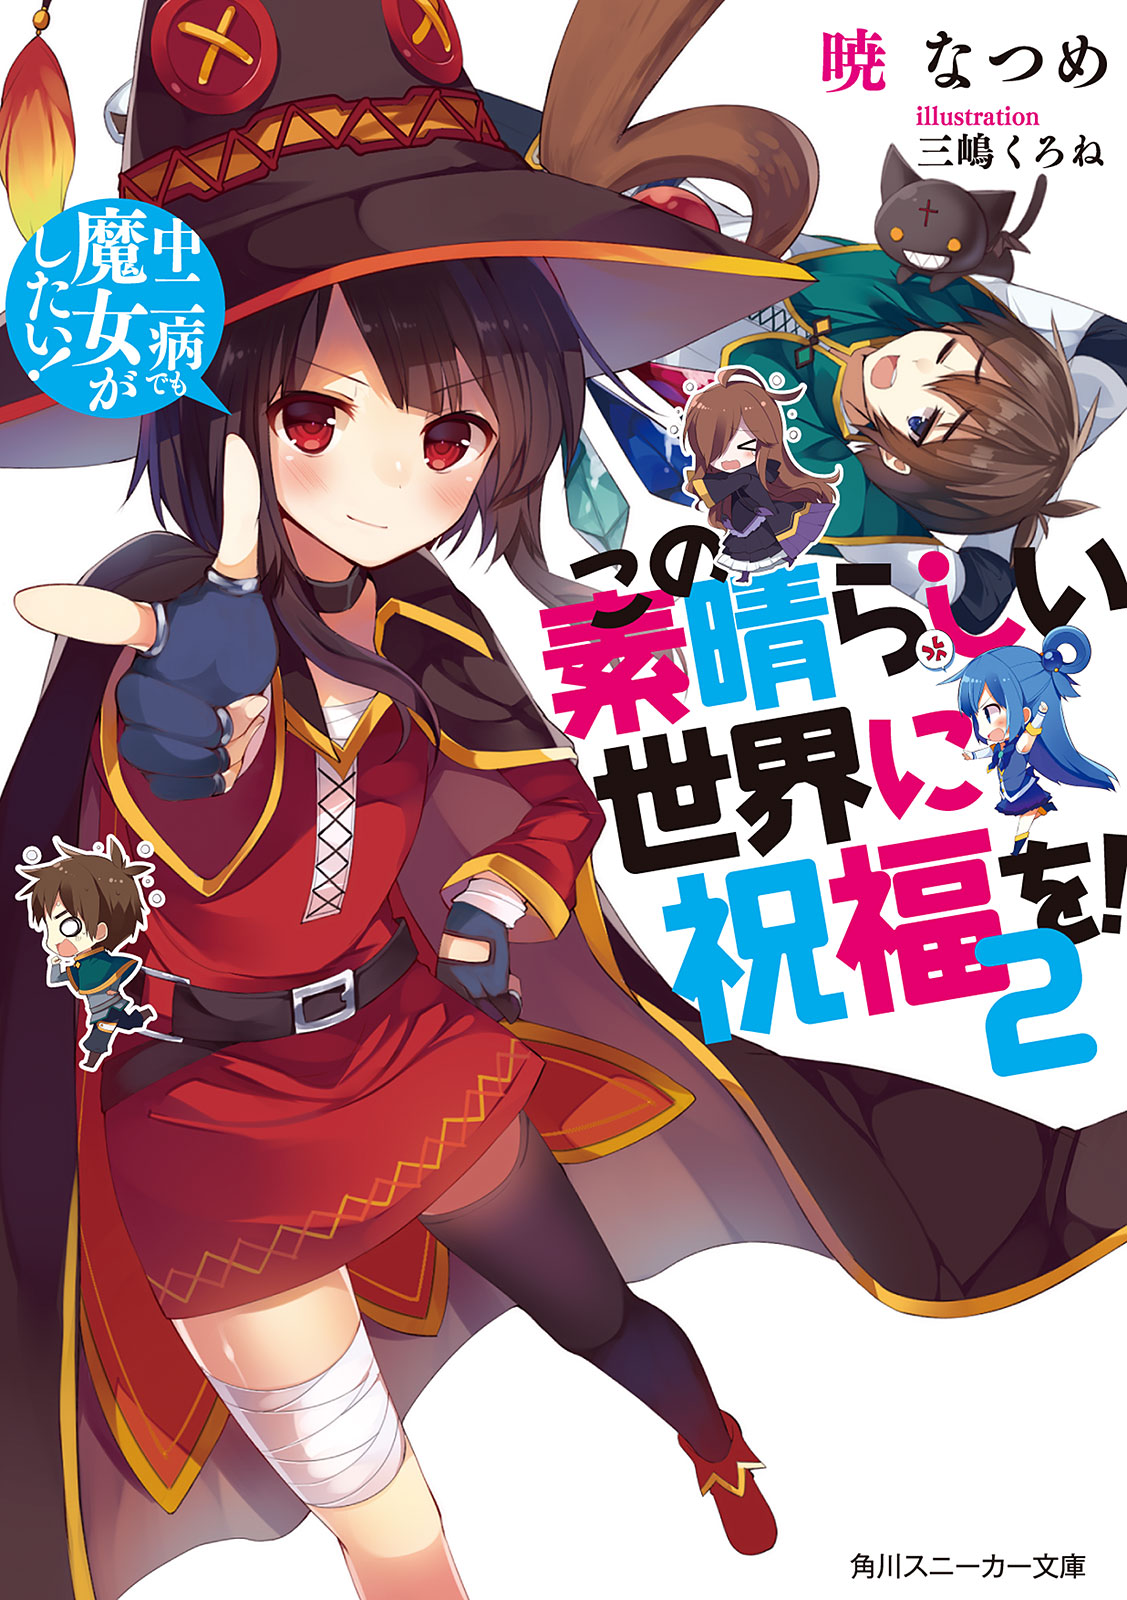 Kono Subarashii Sekai ni Shukufuku wo! 15 comic manga anime Megumin  Japanese